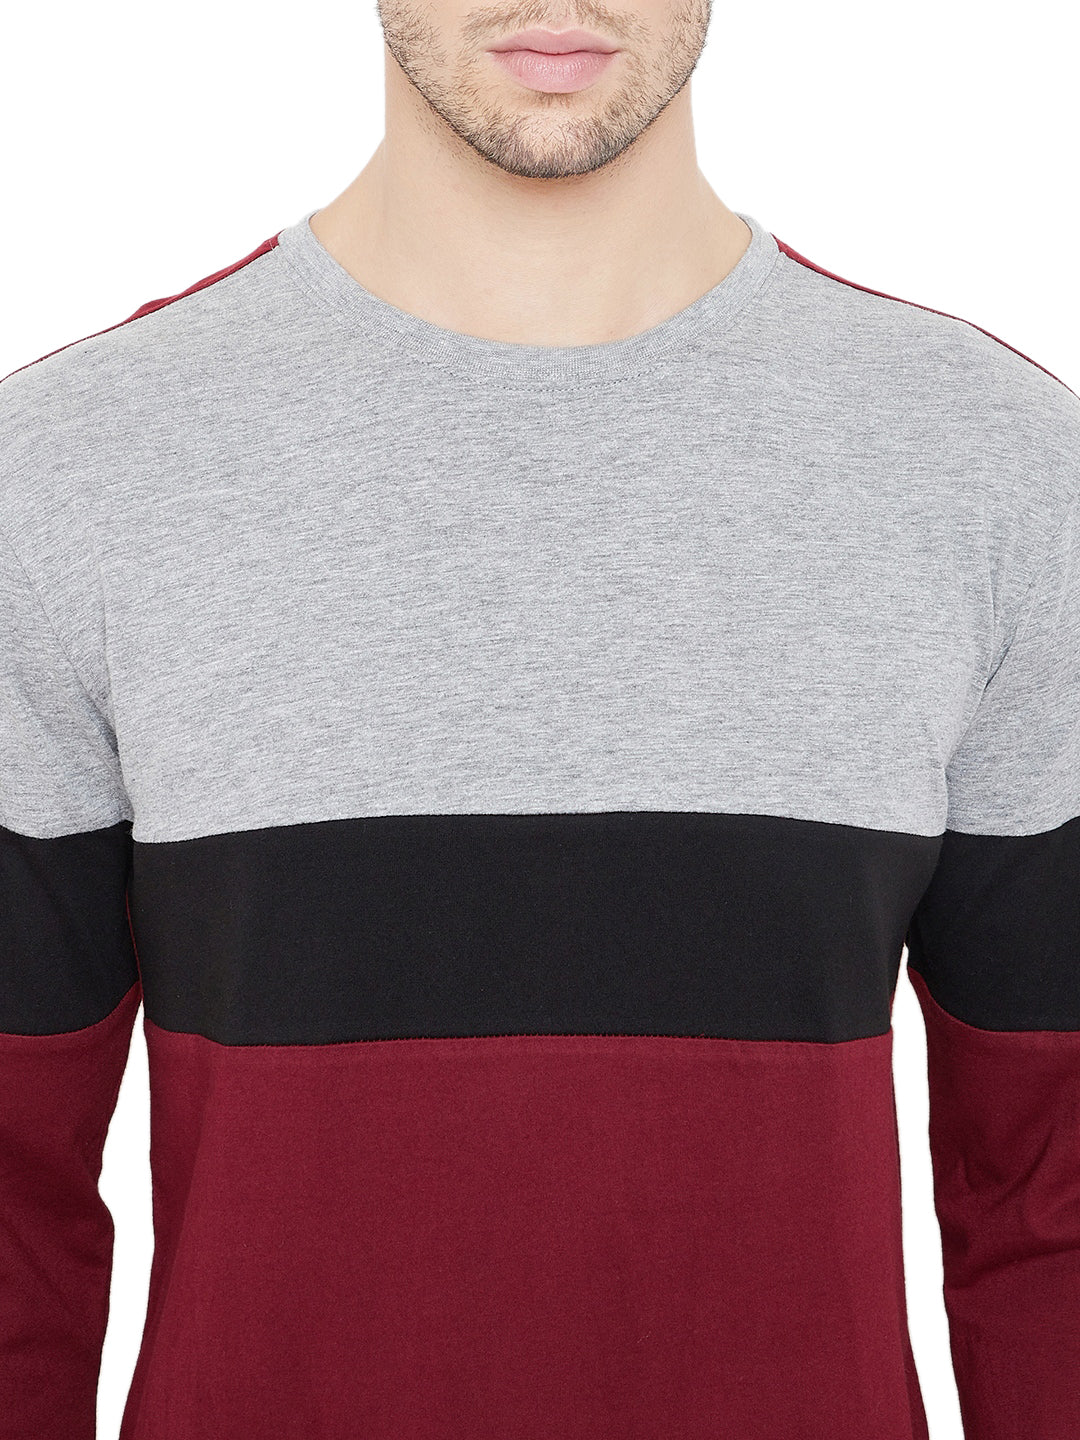 Grey Melange/Black/Maroon Men Full Sleeves Round Neck Color Block T-Shirt